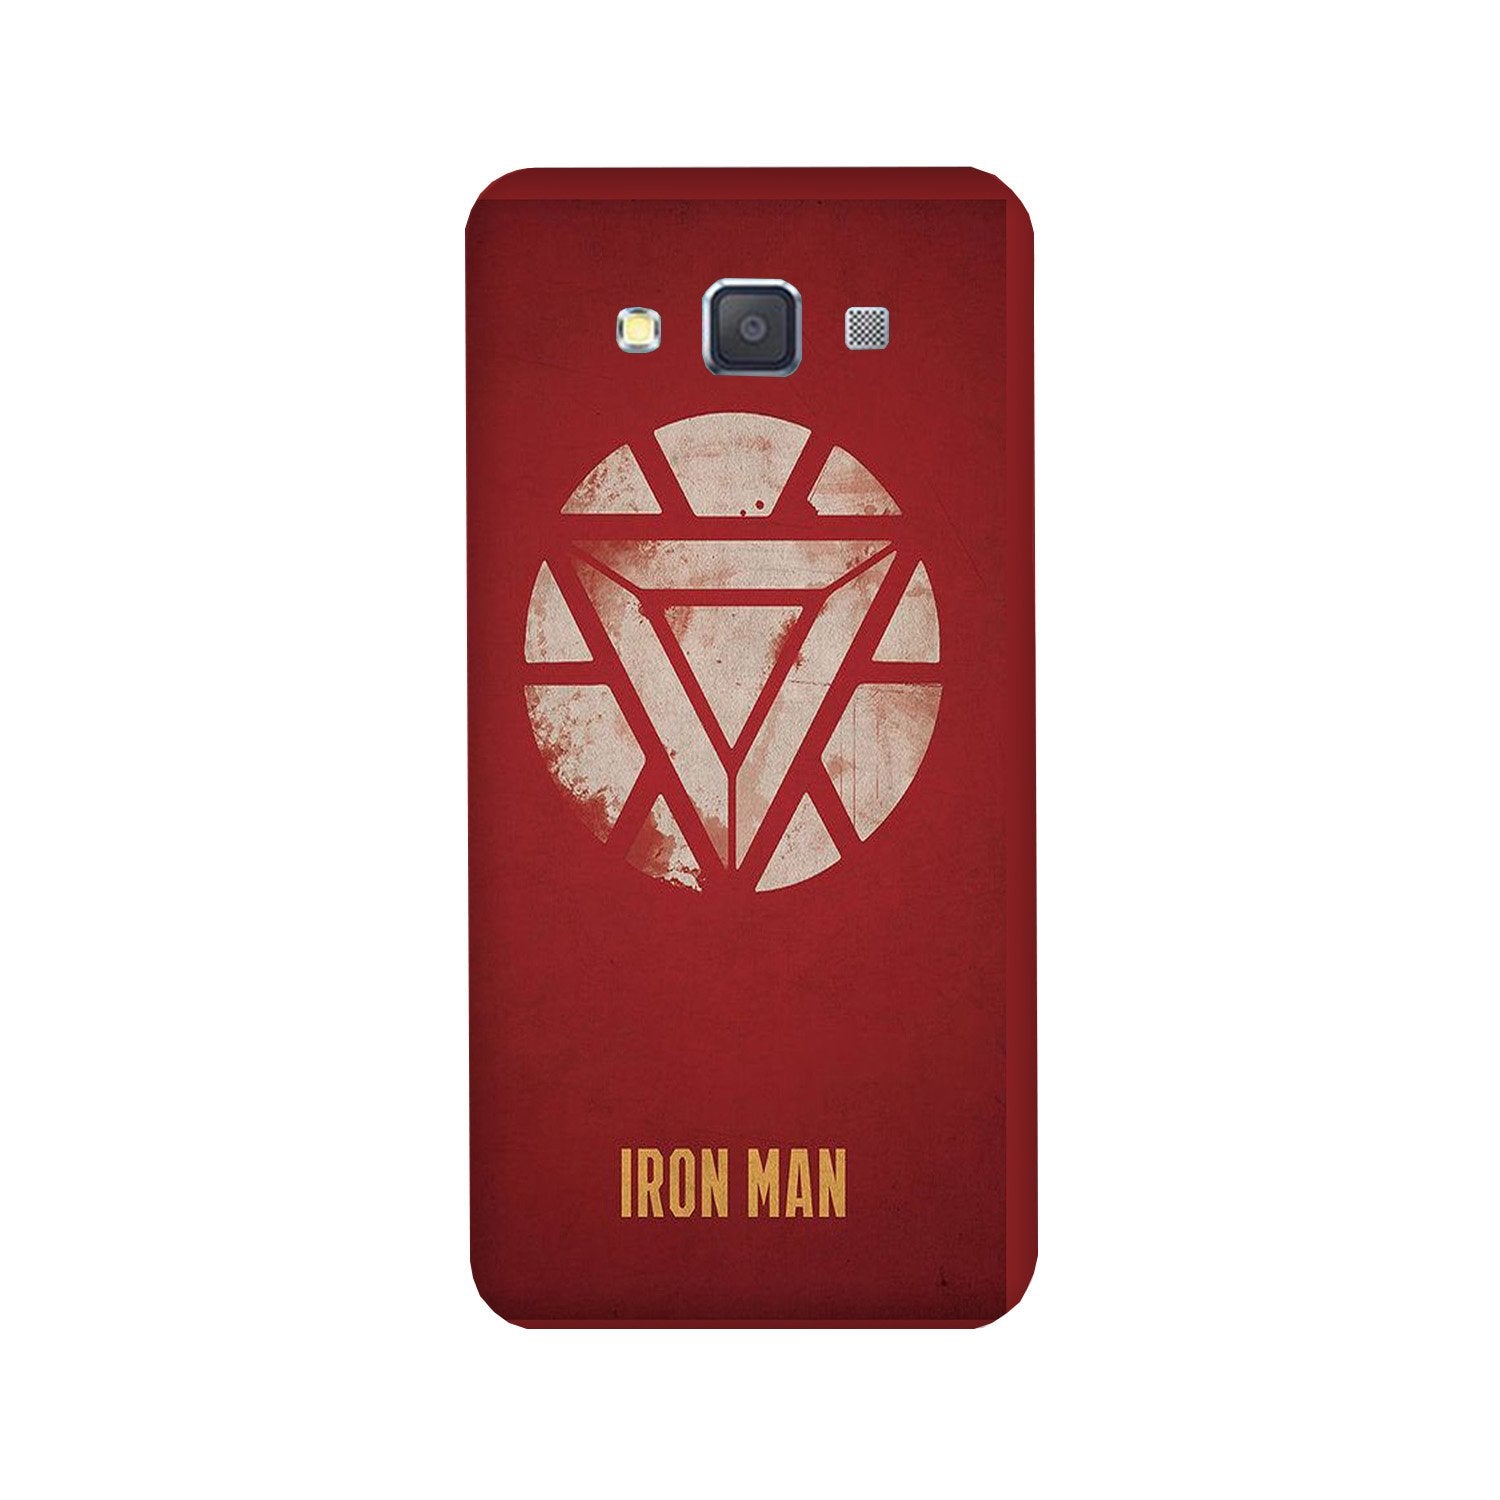 Iron Man Superhero Case for Galaxy Grand Max  (Design - 115)